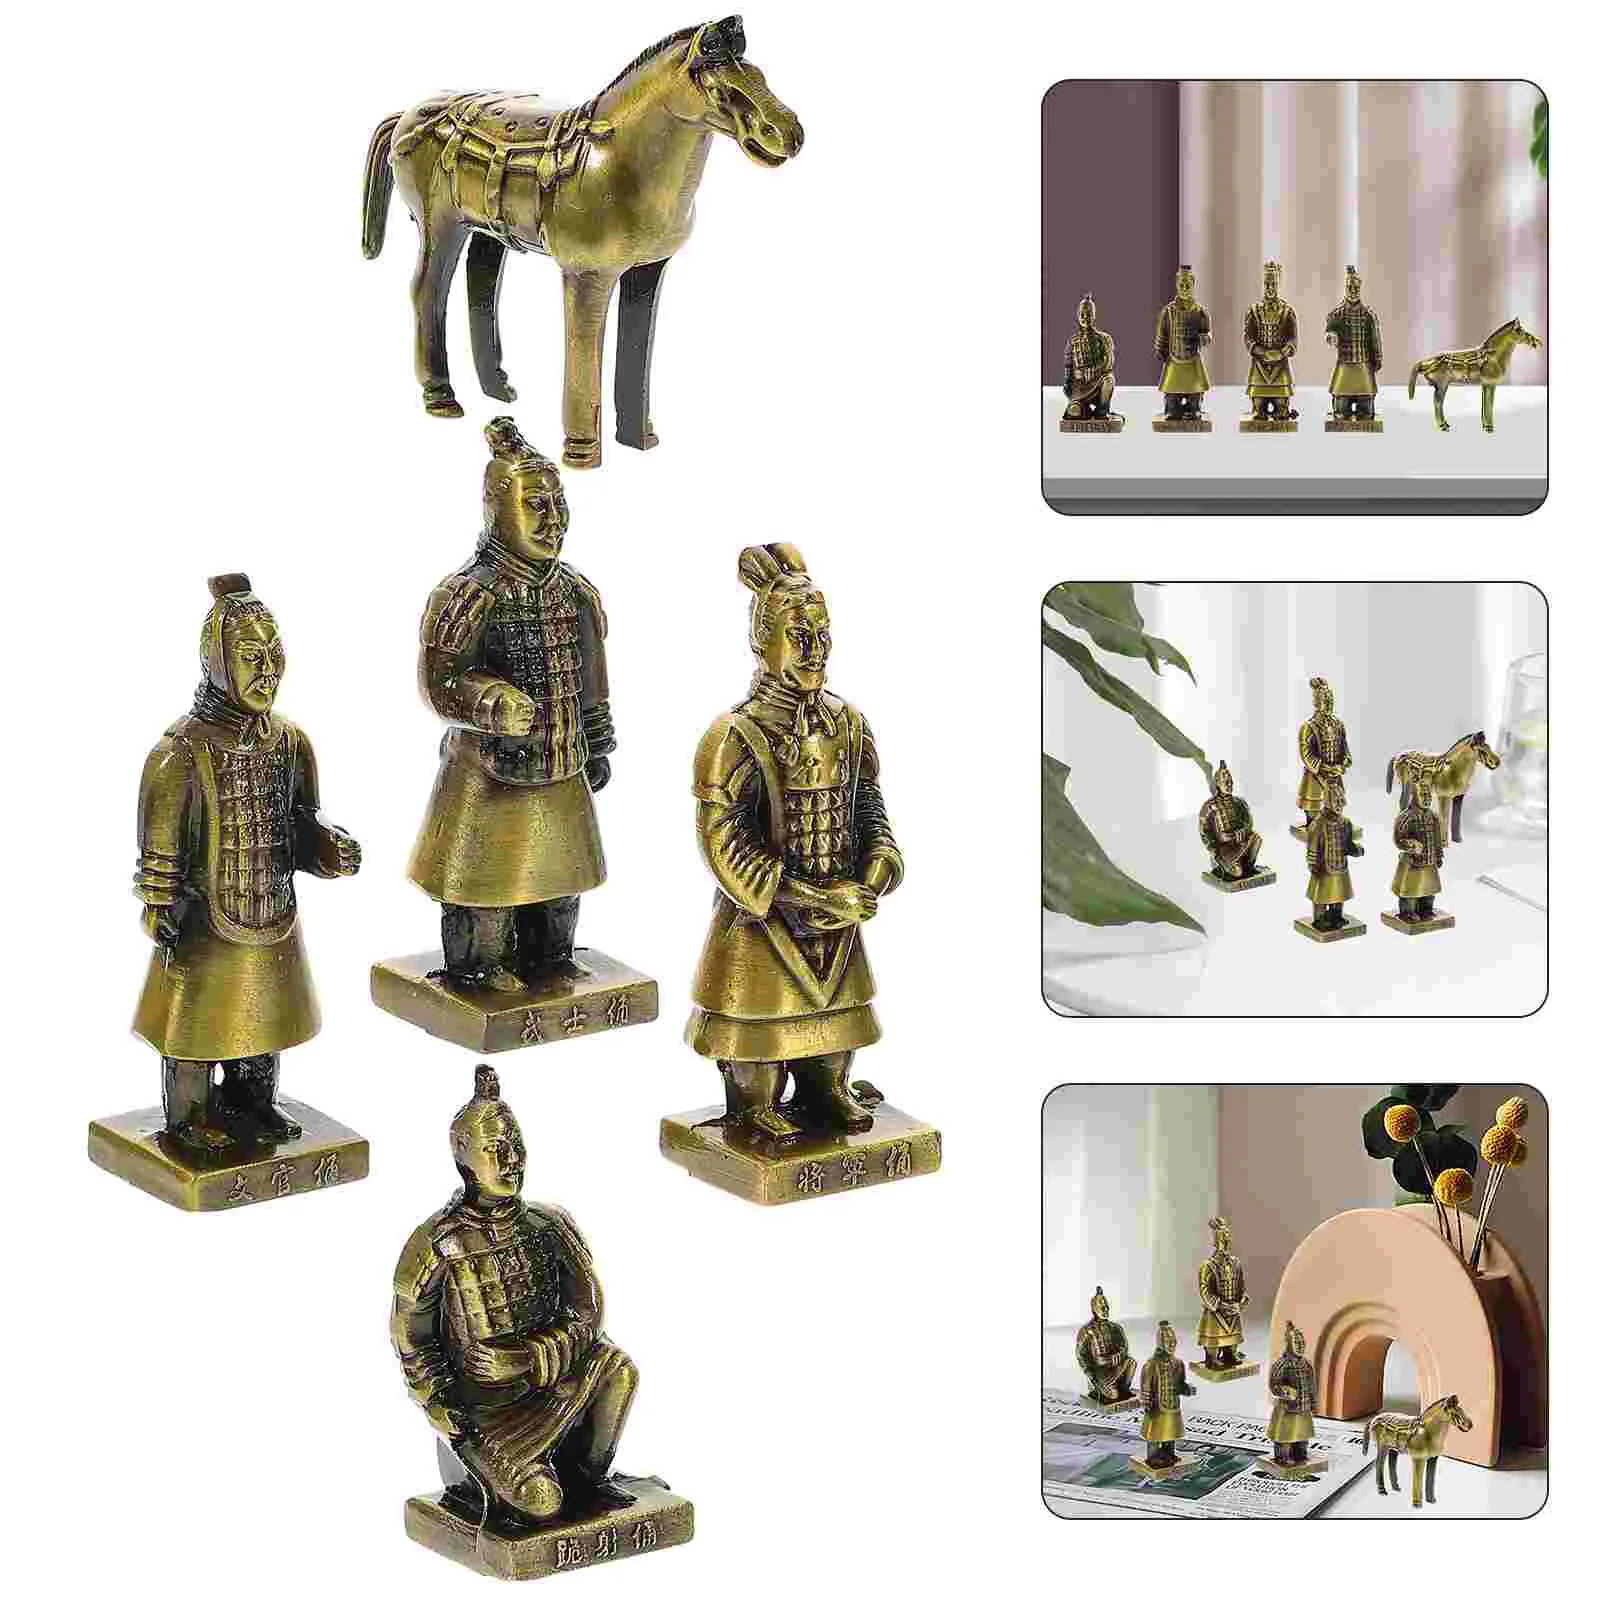 

Terracotta Warriors Horse Statues Statue Warrior Chinese Figurine Ancientdesktopmini Sculpture Qin Dynasty China Bronze